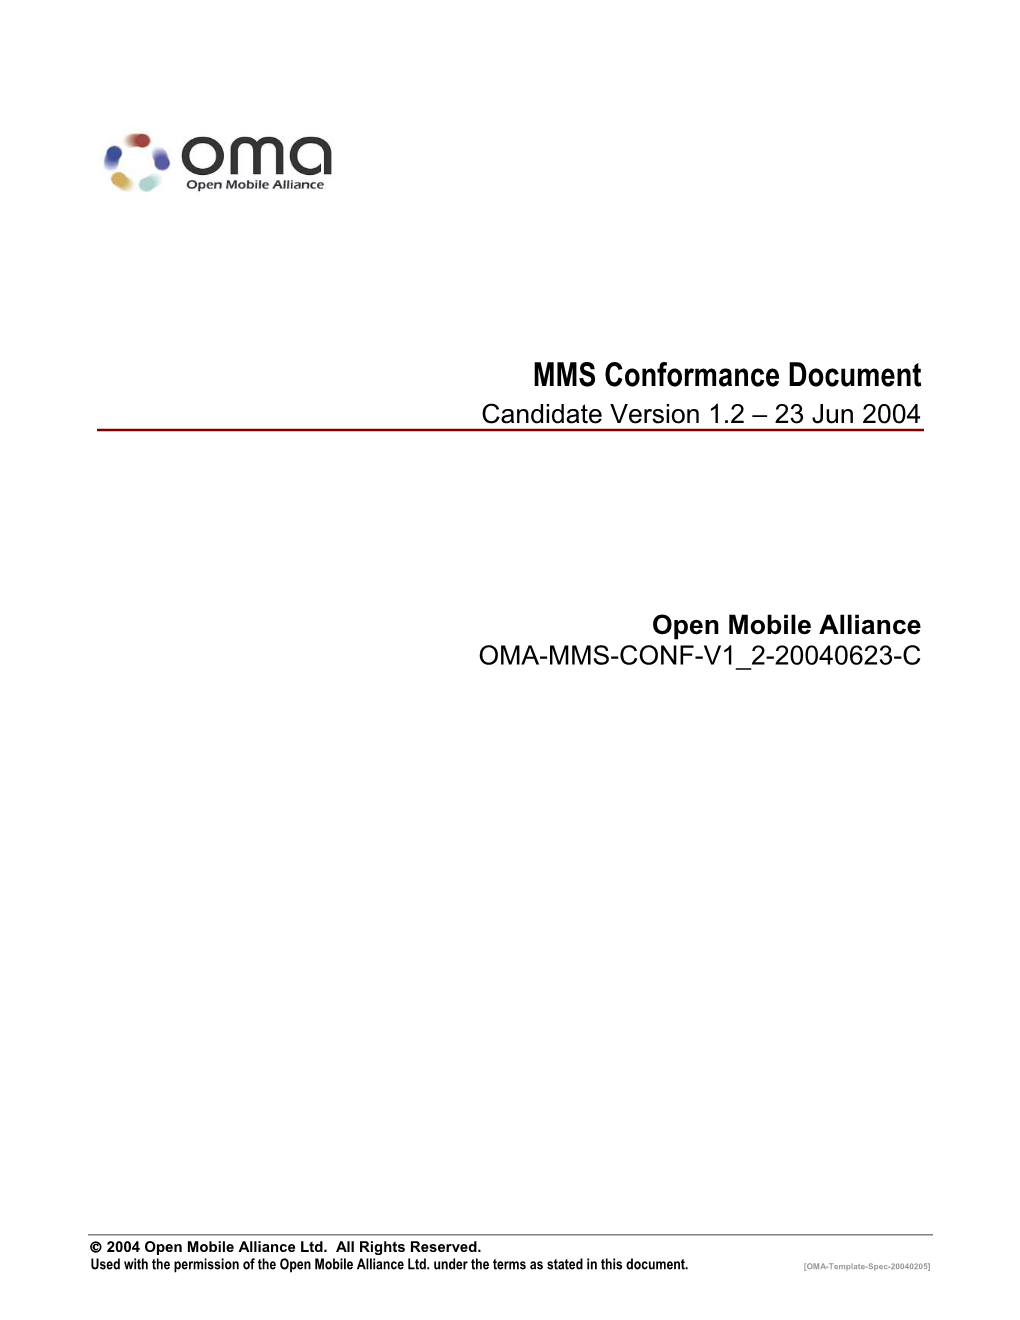 MMS Conformance Document Candidate Version 1.2 – 23 Jun 2004